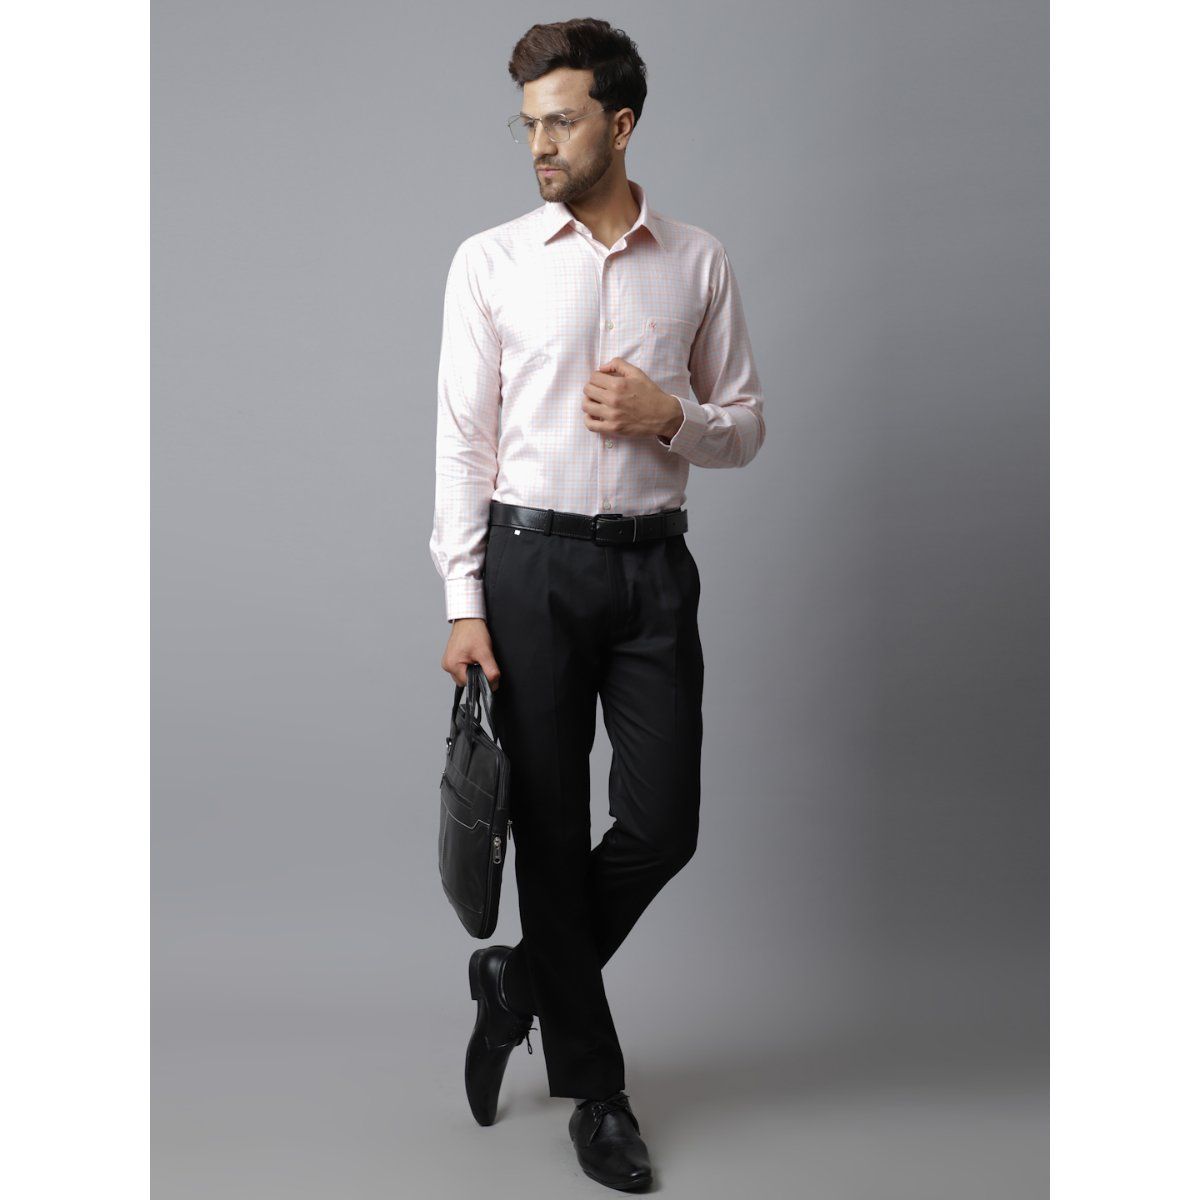 Mens Linen Cotton Formal Light Pink Half Sleeves Shirt LF2